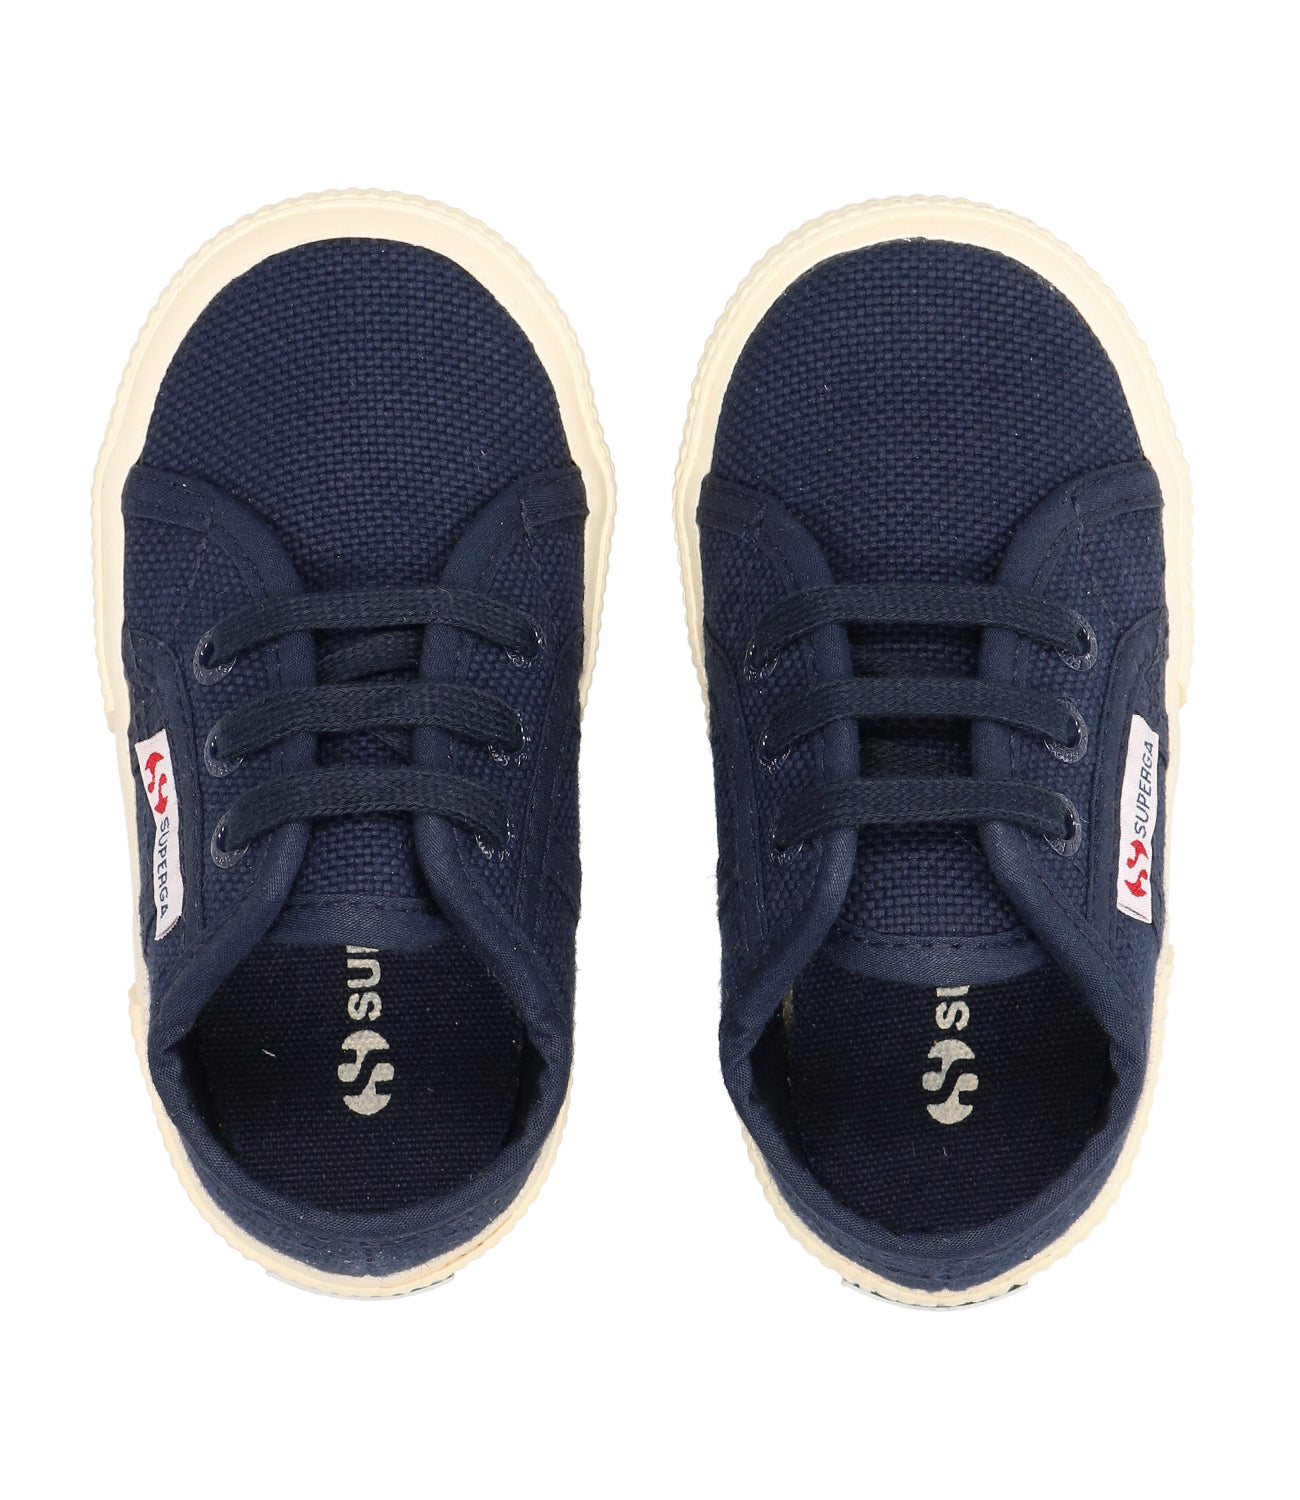 Sneakers Kids | Superga 2750 Blu Navy